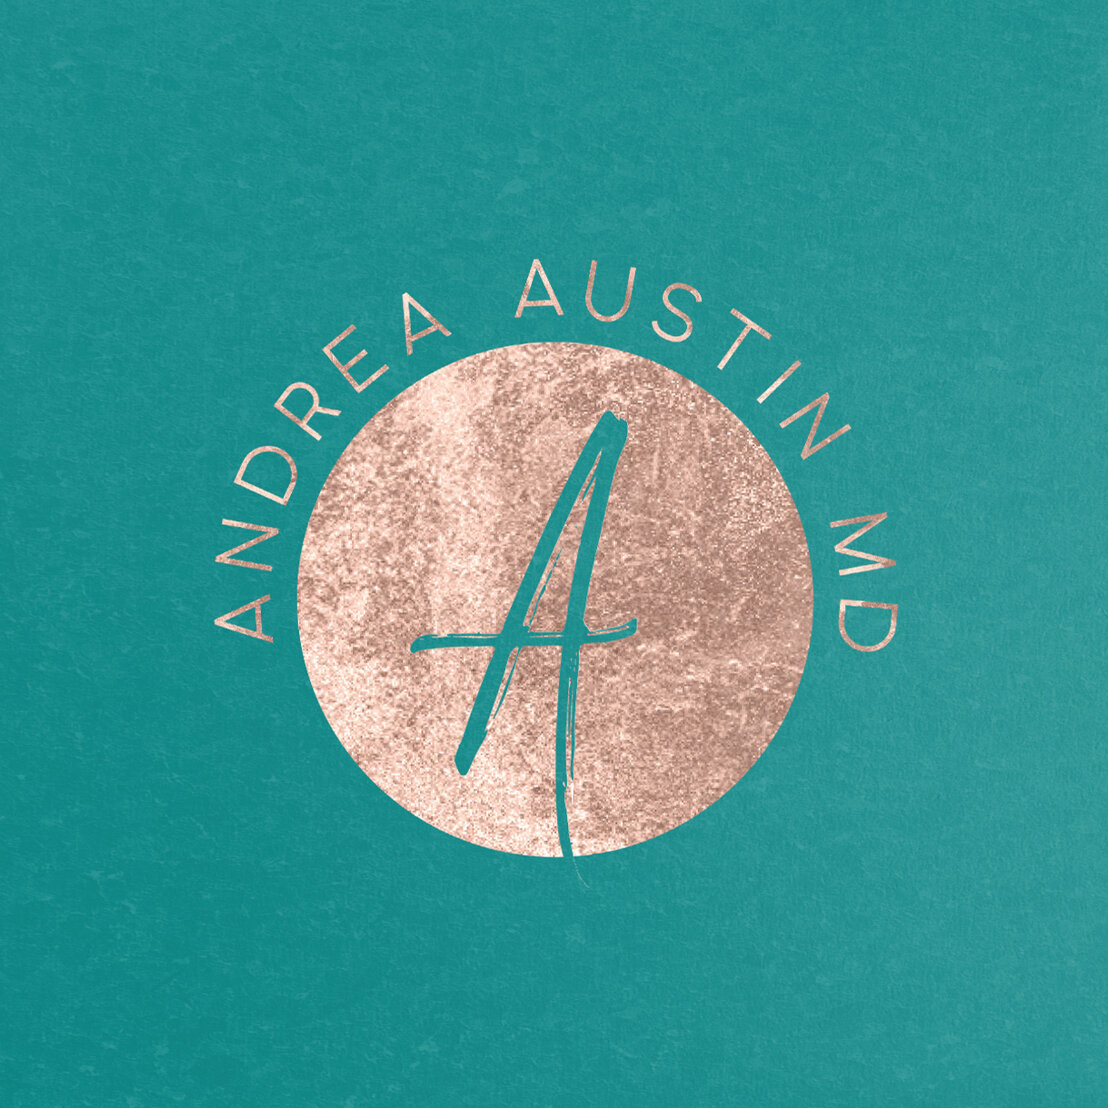 Andrea-Austin-Coasters_mockup_07@2x.jpg